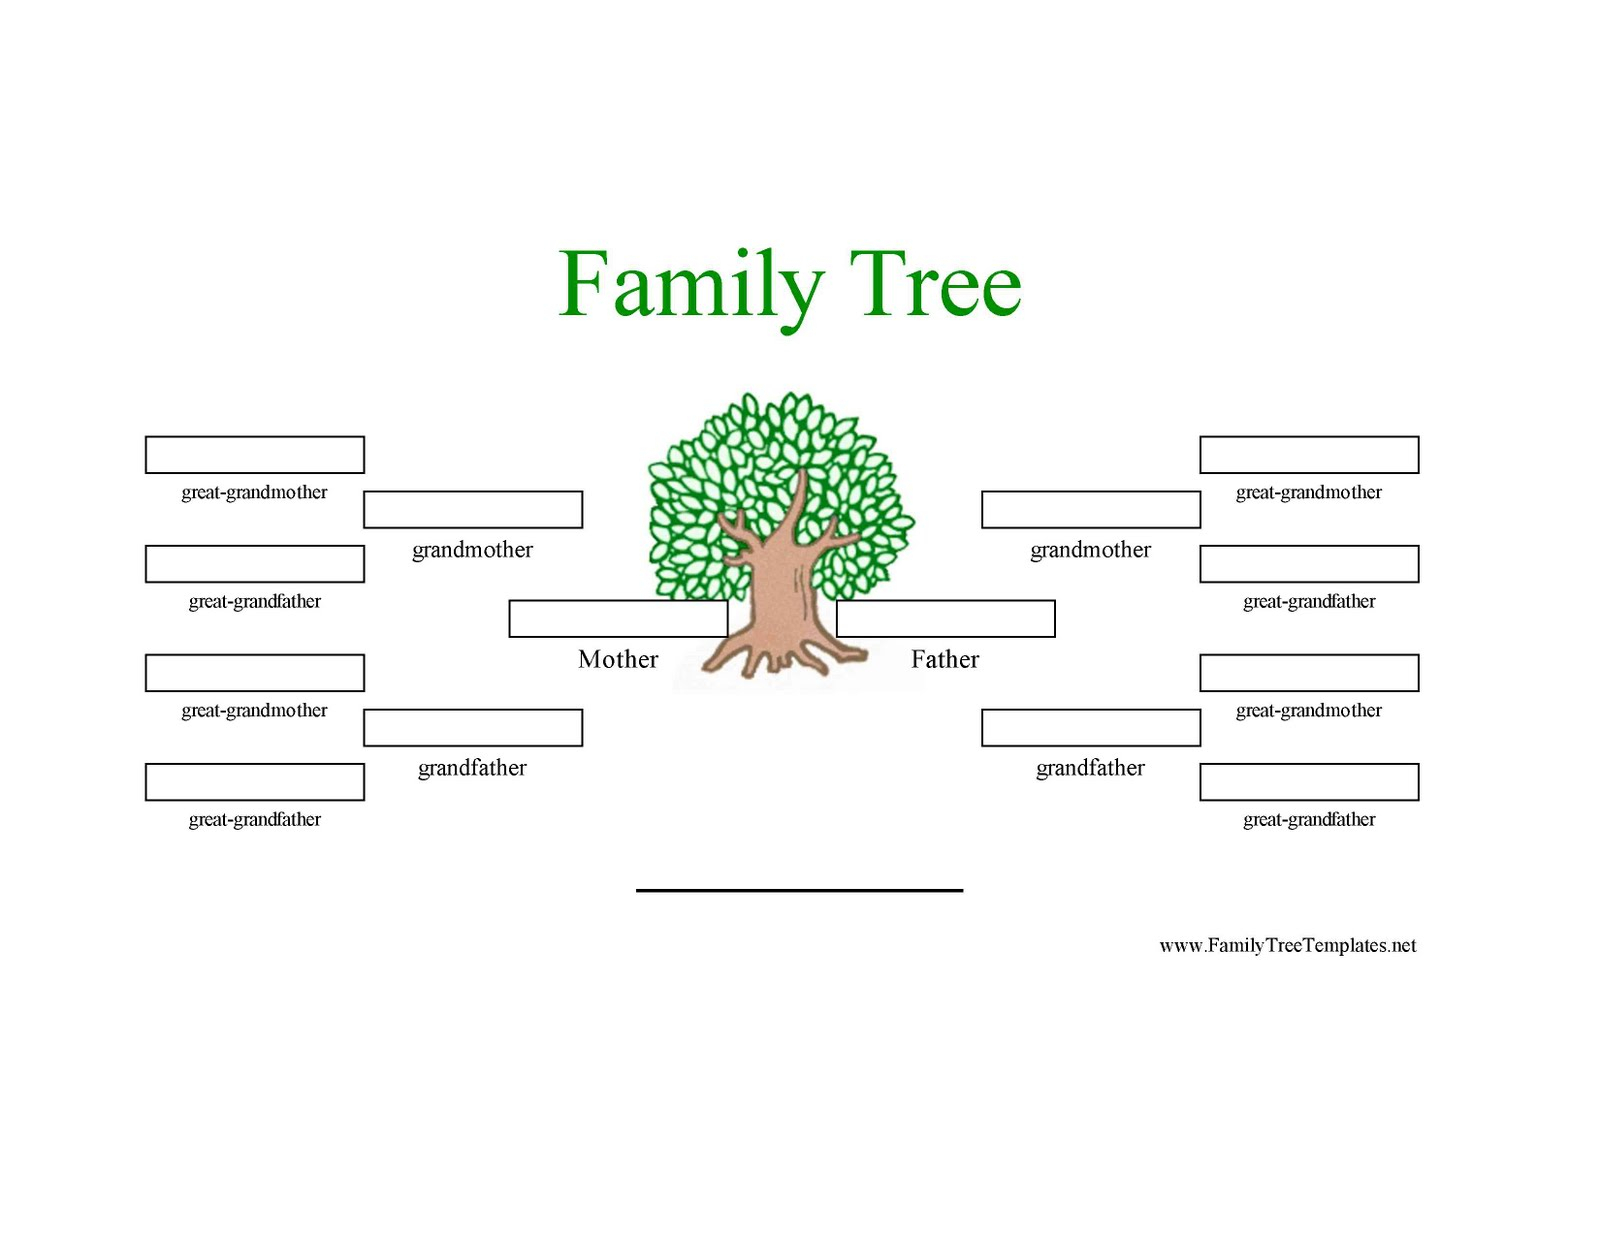 Английский язык дерево проект. My Family Tree 4 класс. Генеалогическое дерево на английском. Семейное дерево шаблон. Семейное Древо по английскому языку.